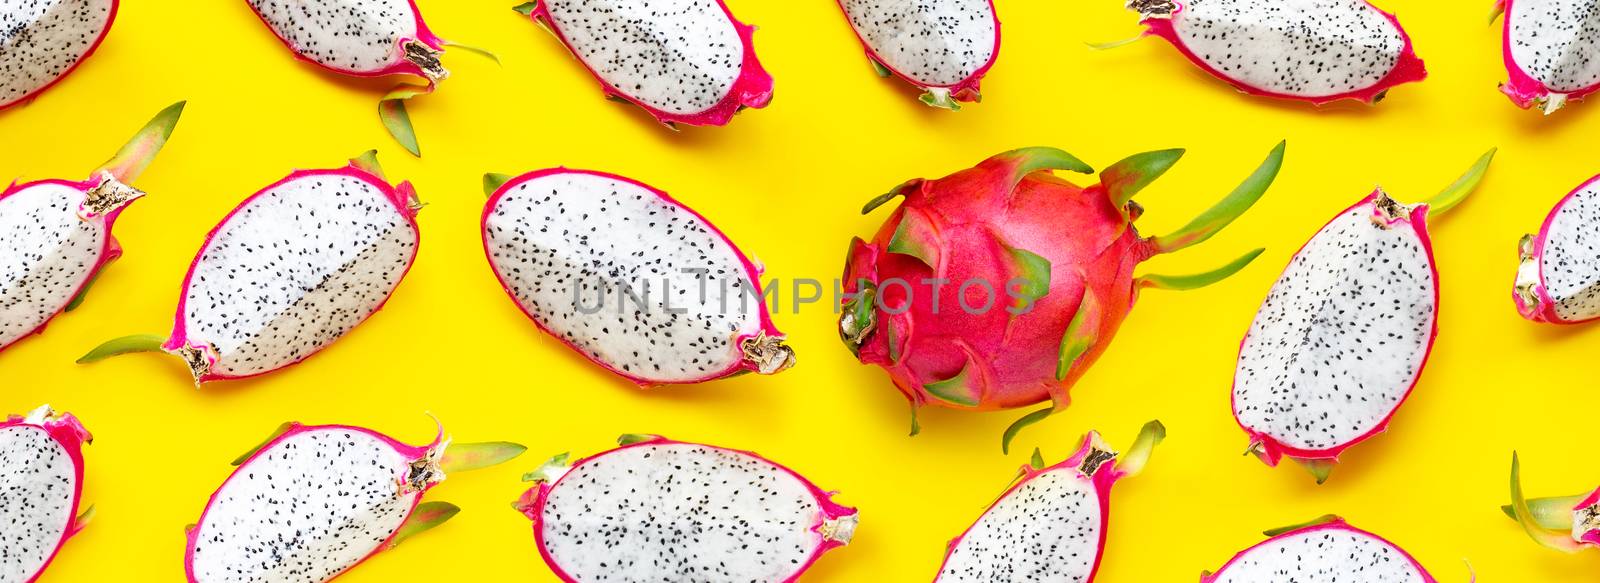 Ripe dragonfruit or pitahaya slices on yellow background.  by Bowonpat